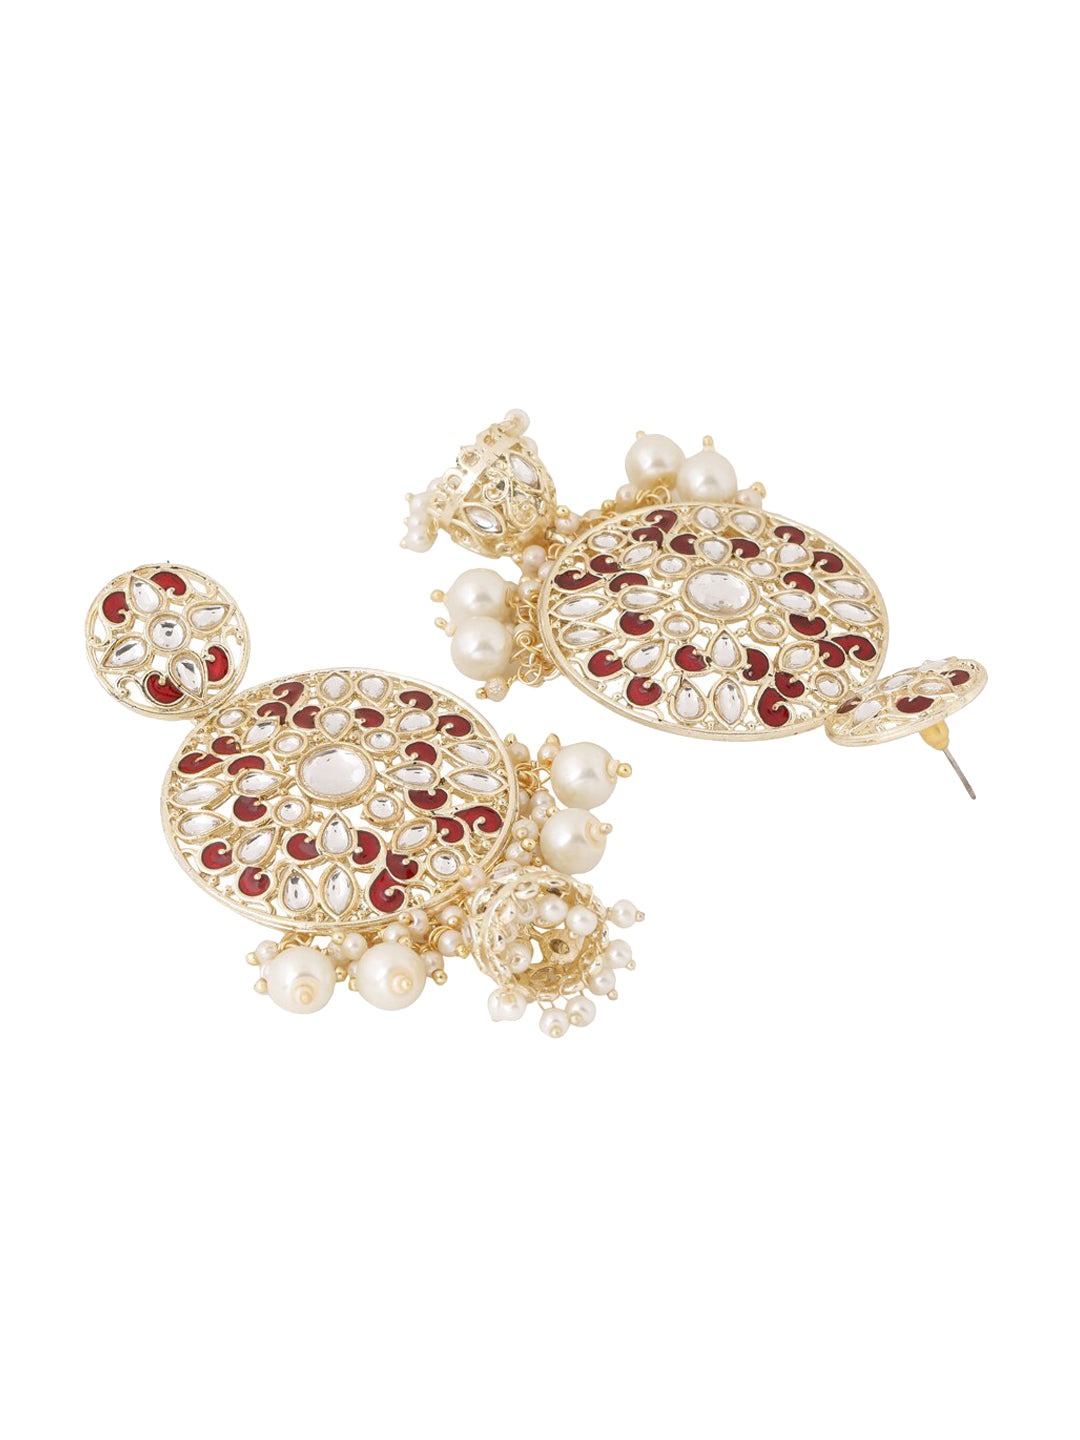 Earrings : Alloy gold palted kundan pearls jhumka earrings